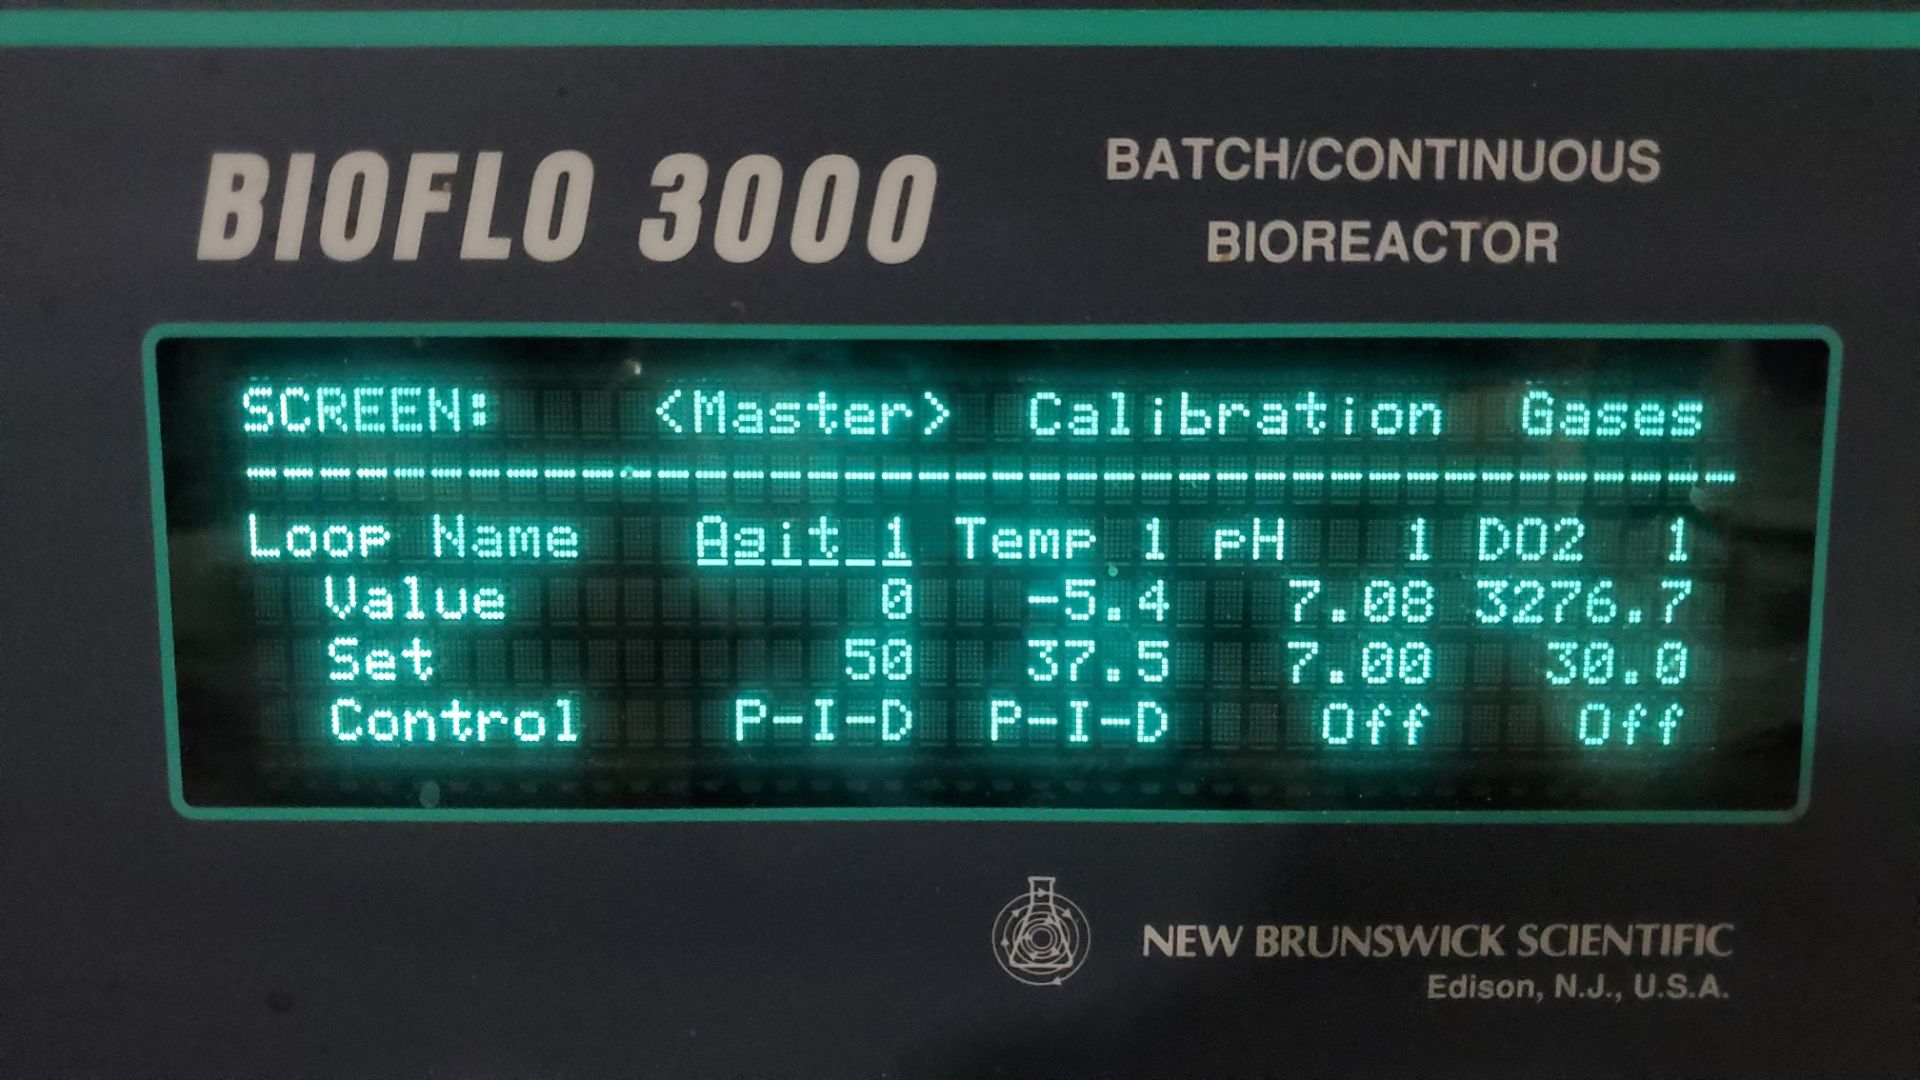 Bioflow 3000 fermenter - Image 2 of 11